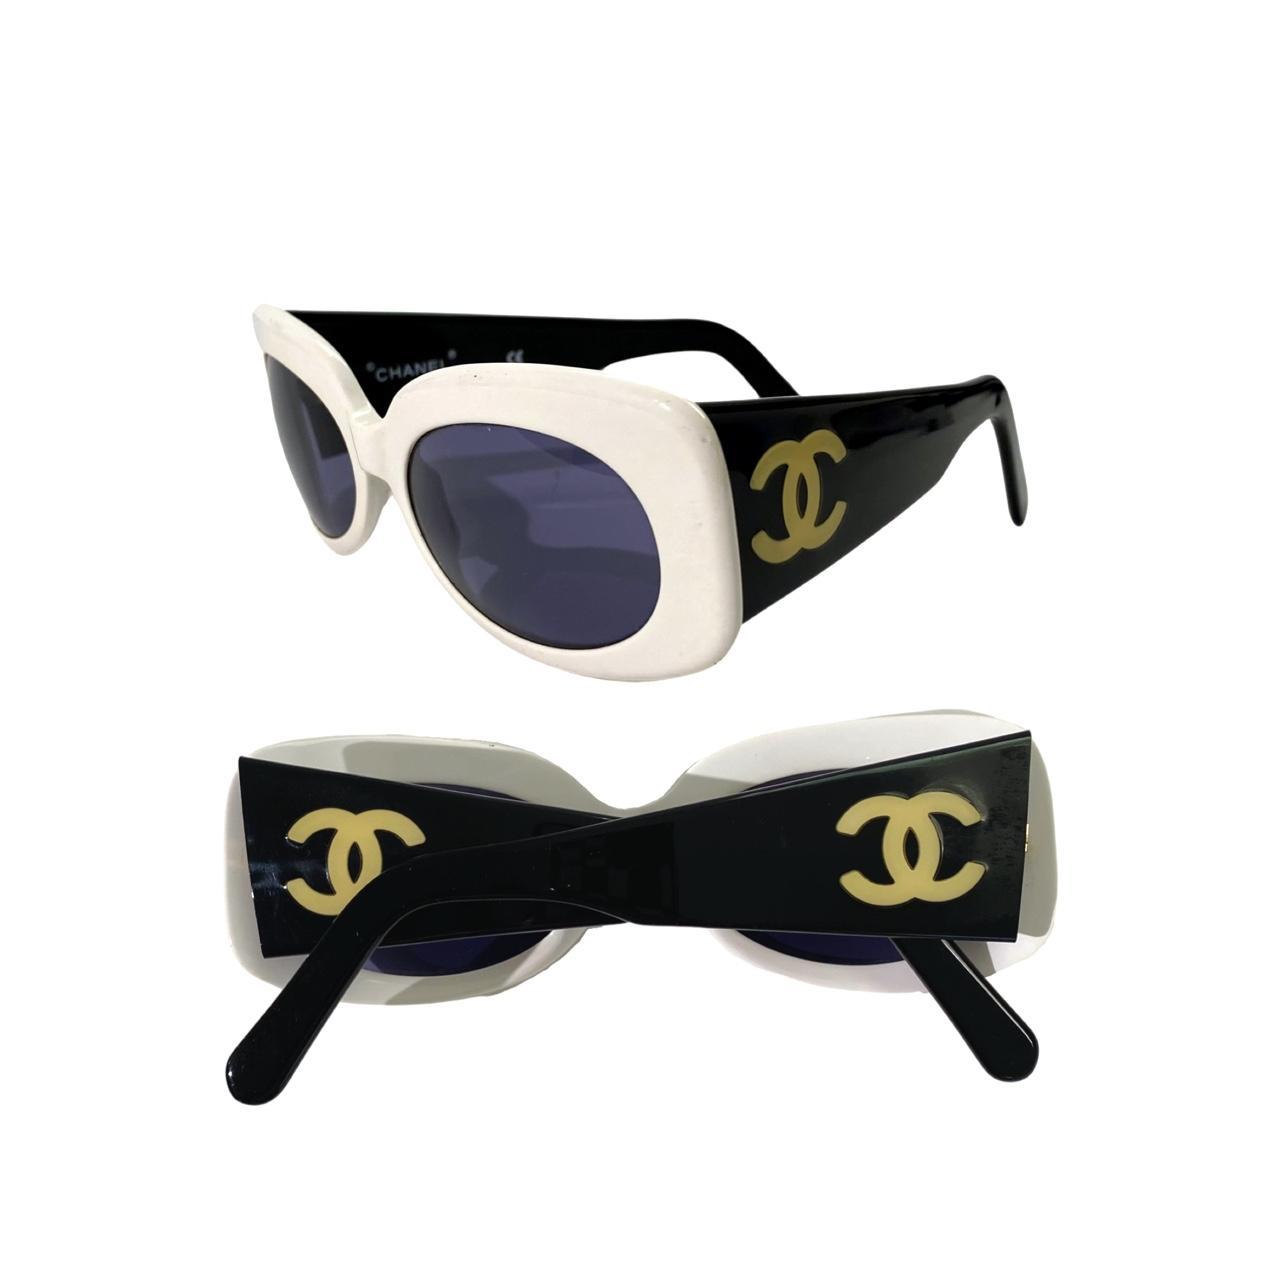 Chanel Women's Party Sunglasses - White